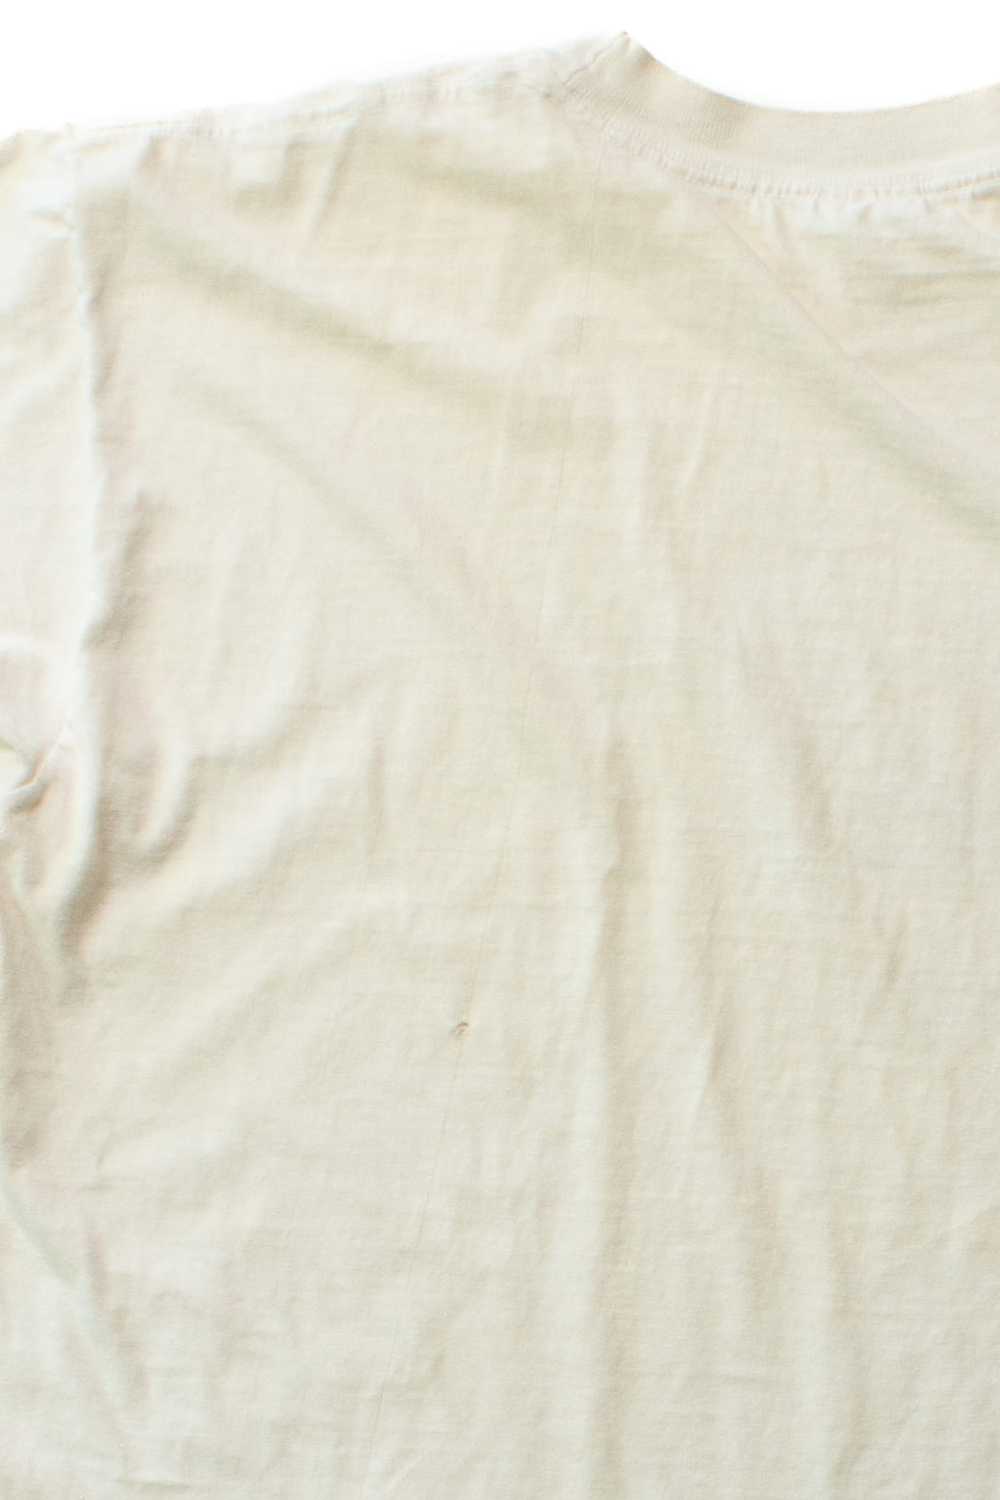 Vintage The Far Side Shark Nerds T-Shirt (1980s) - image 4